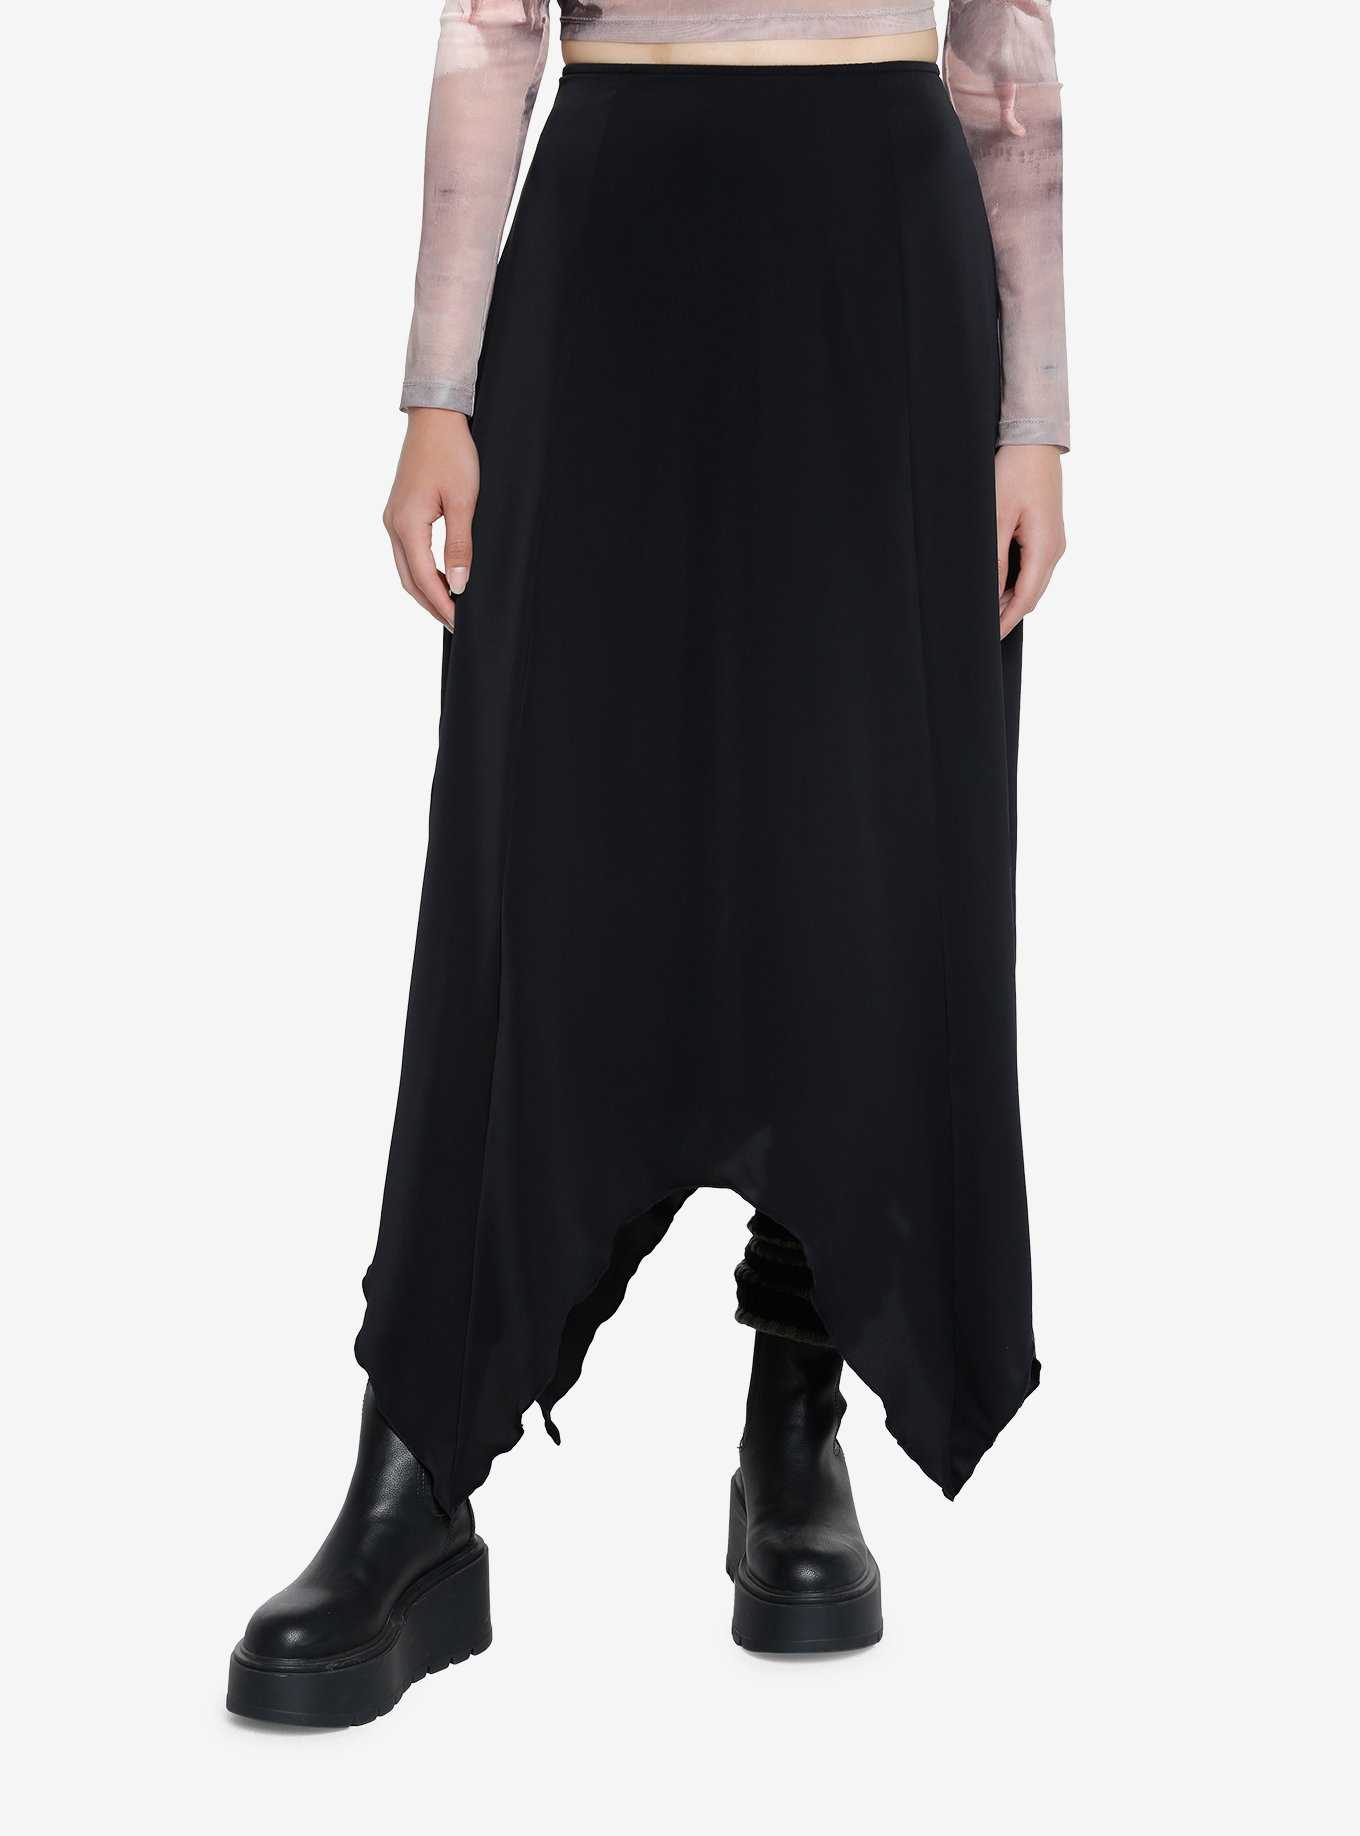 Cosmic Aura Black Hanky Hem Maxi Skirt, , hi-res